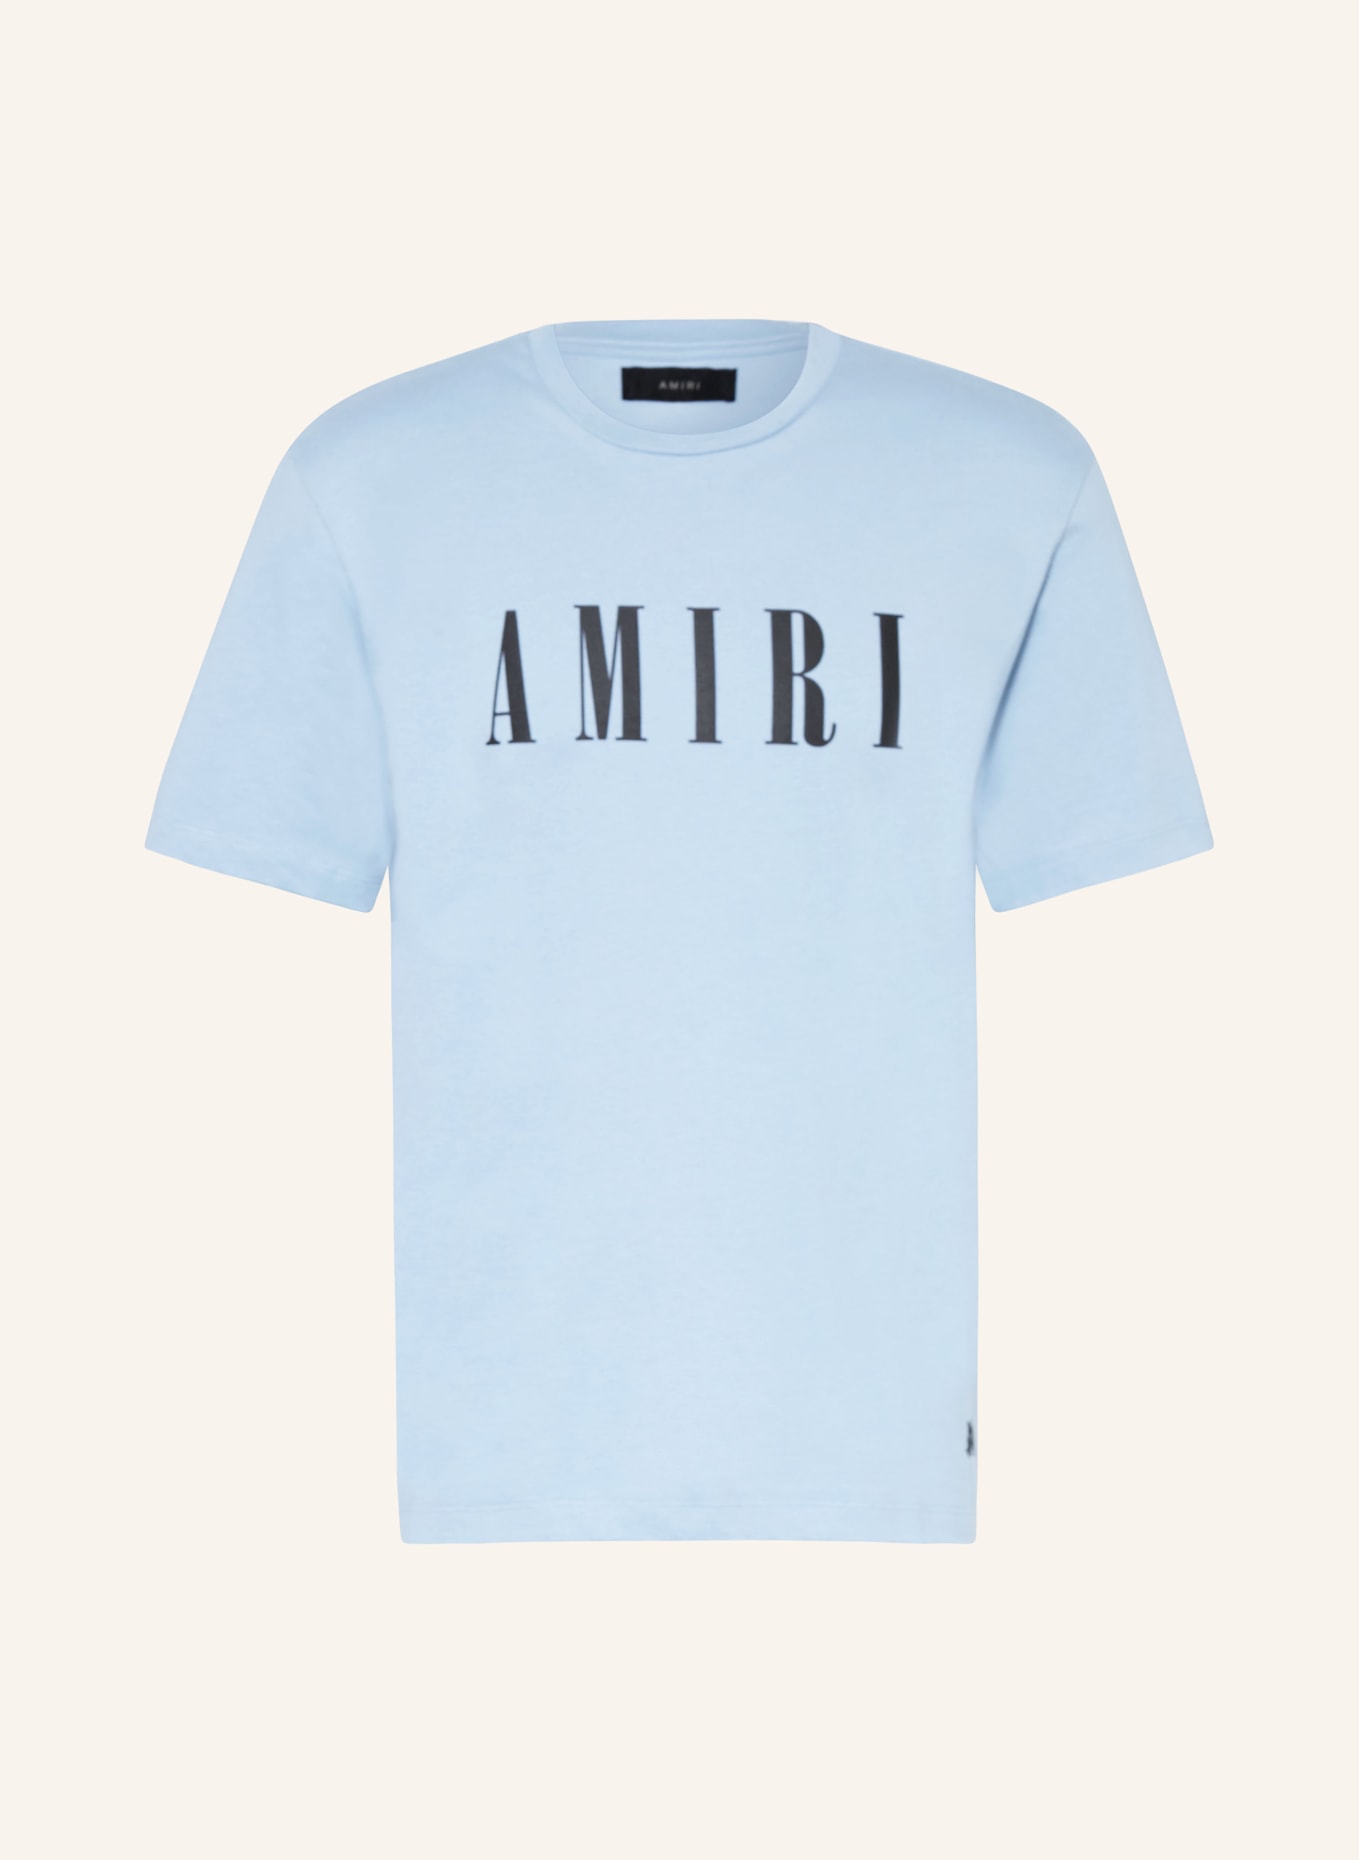 AMIRI T-Shirt, Farbe: BLAUGRAU (Bild 1)